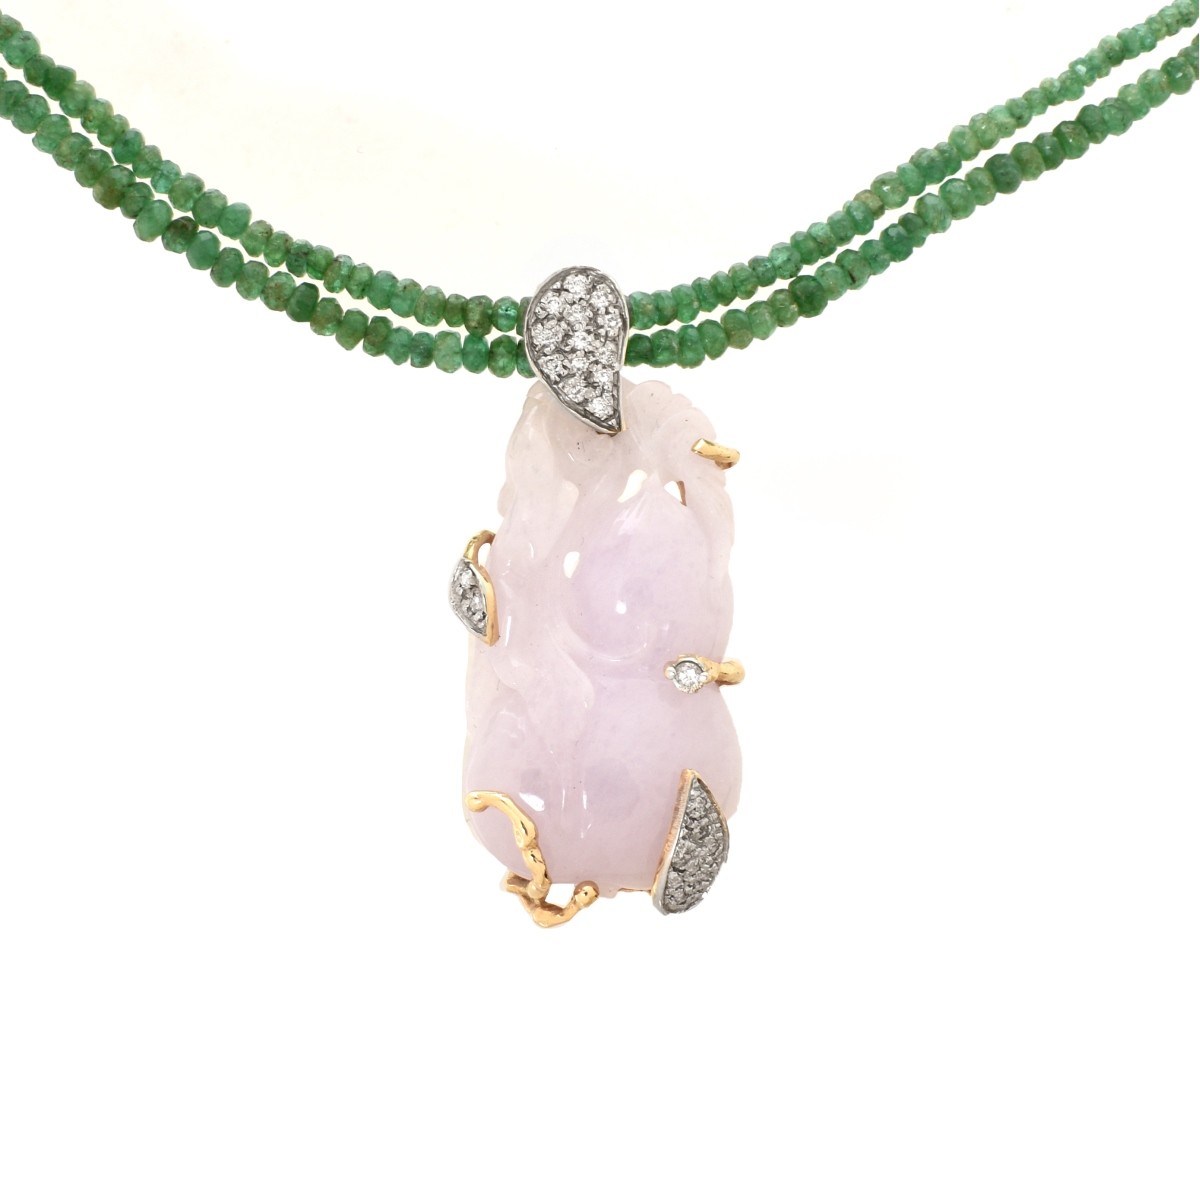 Jade, Emerald, Diamond and 14K Necklace